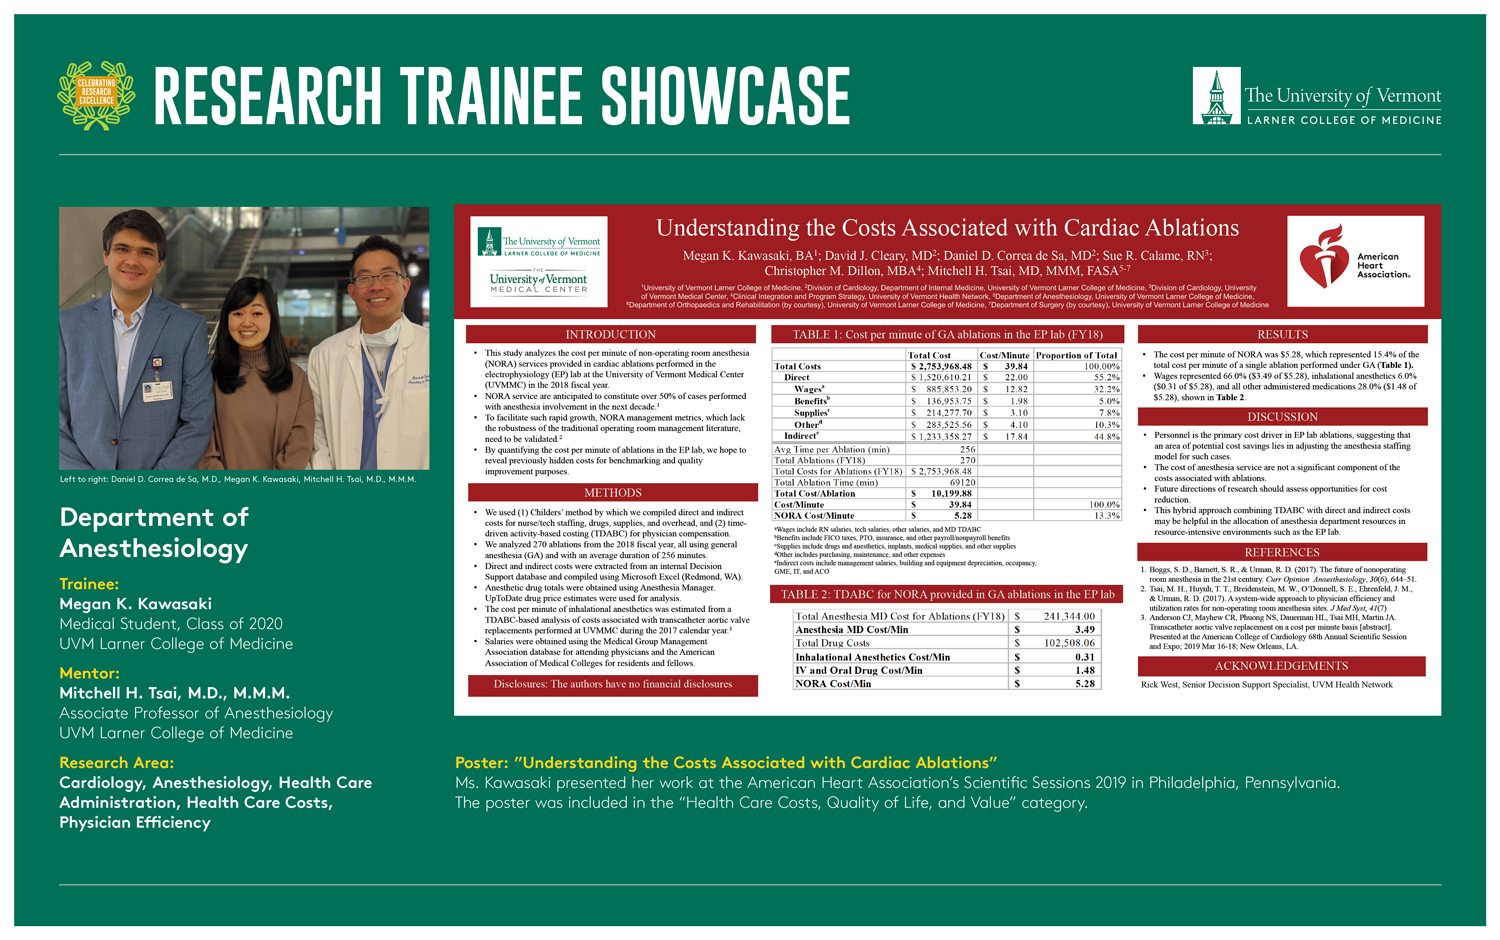 Research Trainee Showcase Poster highlighting trainee, Megan Kawasaki and mentor, Mitchell Tsai, M.D., M.M.M.